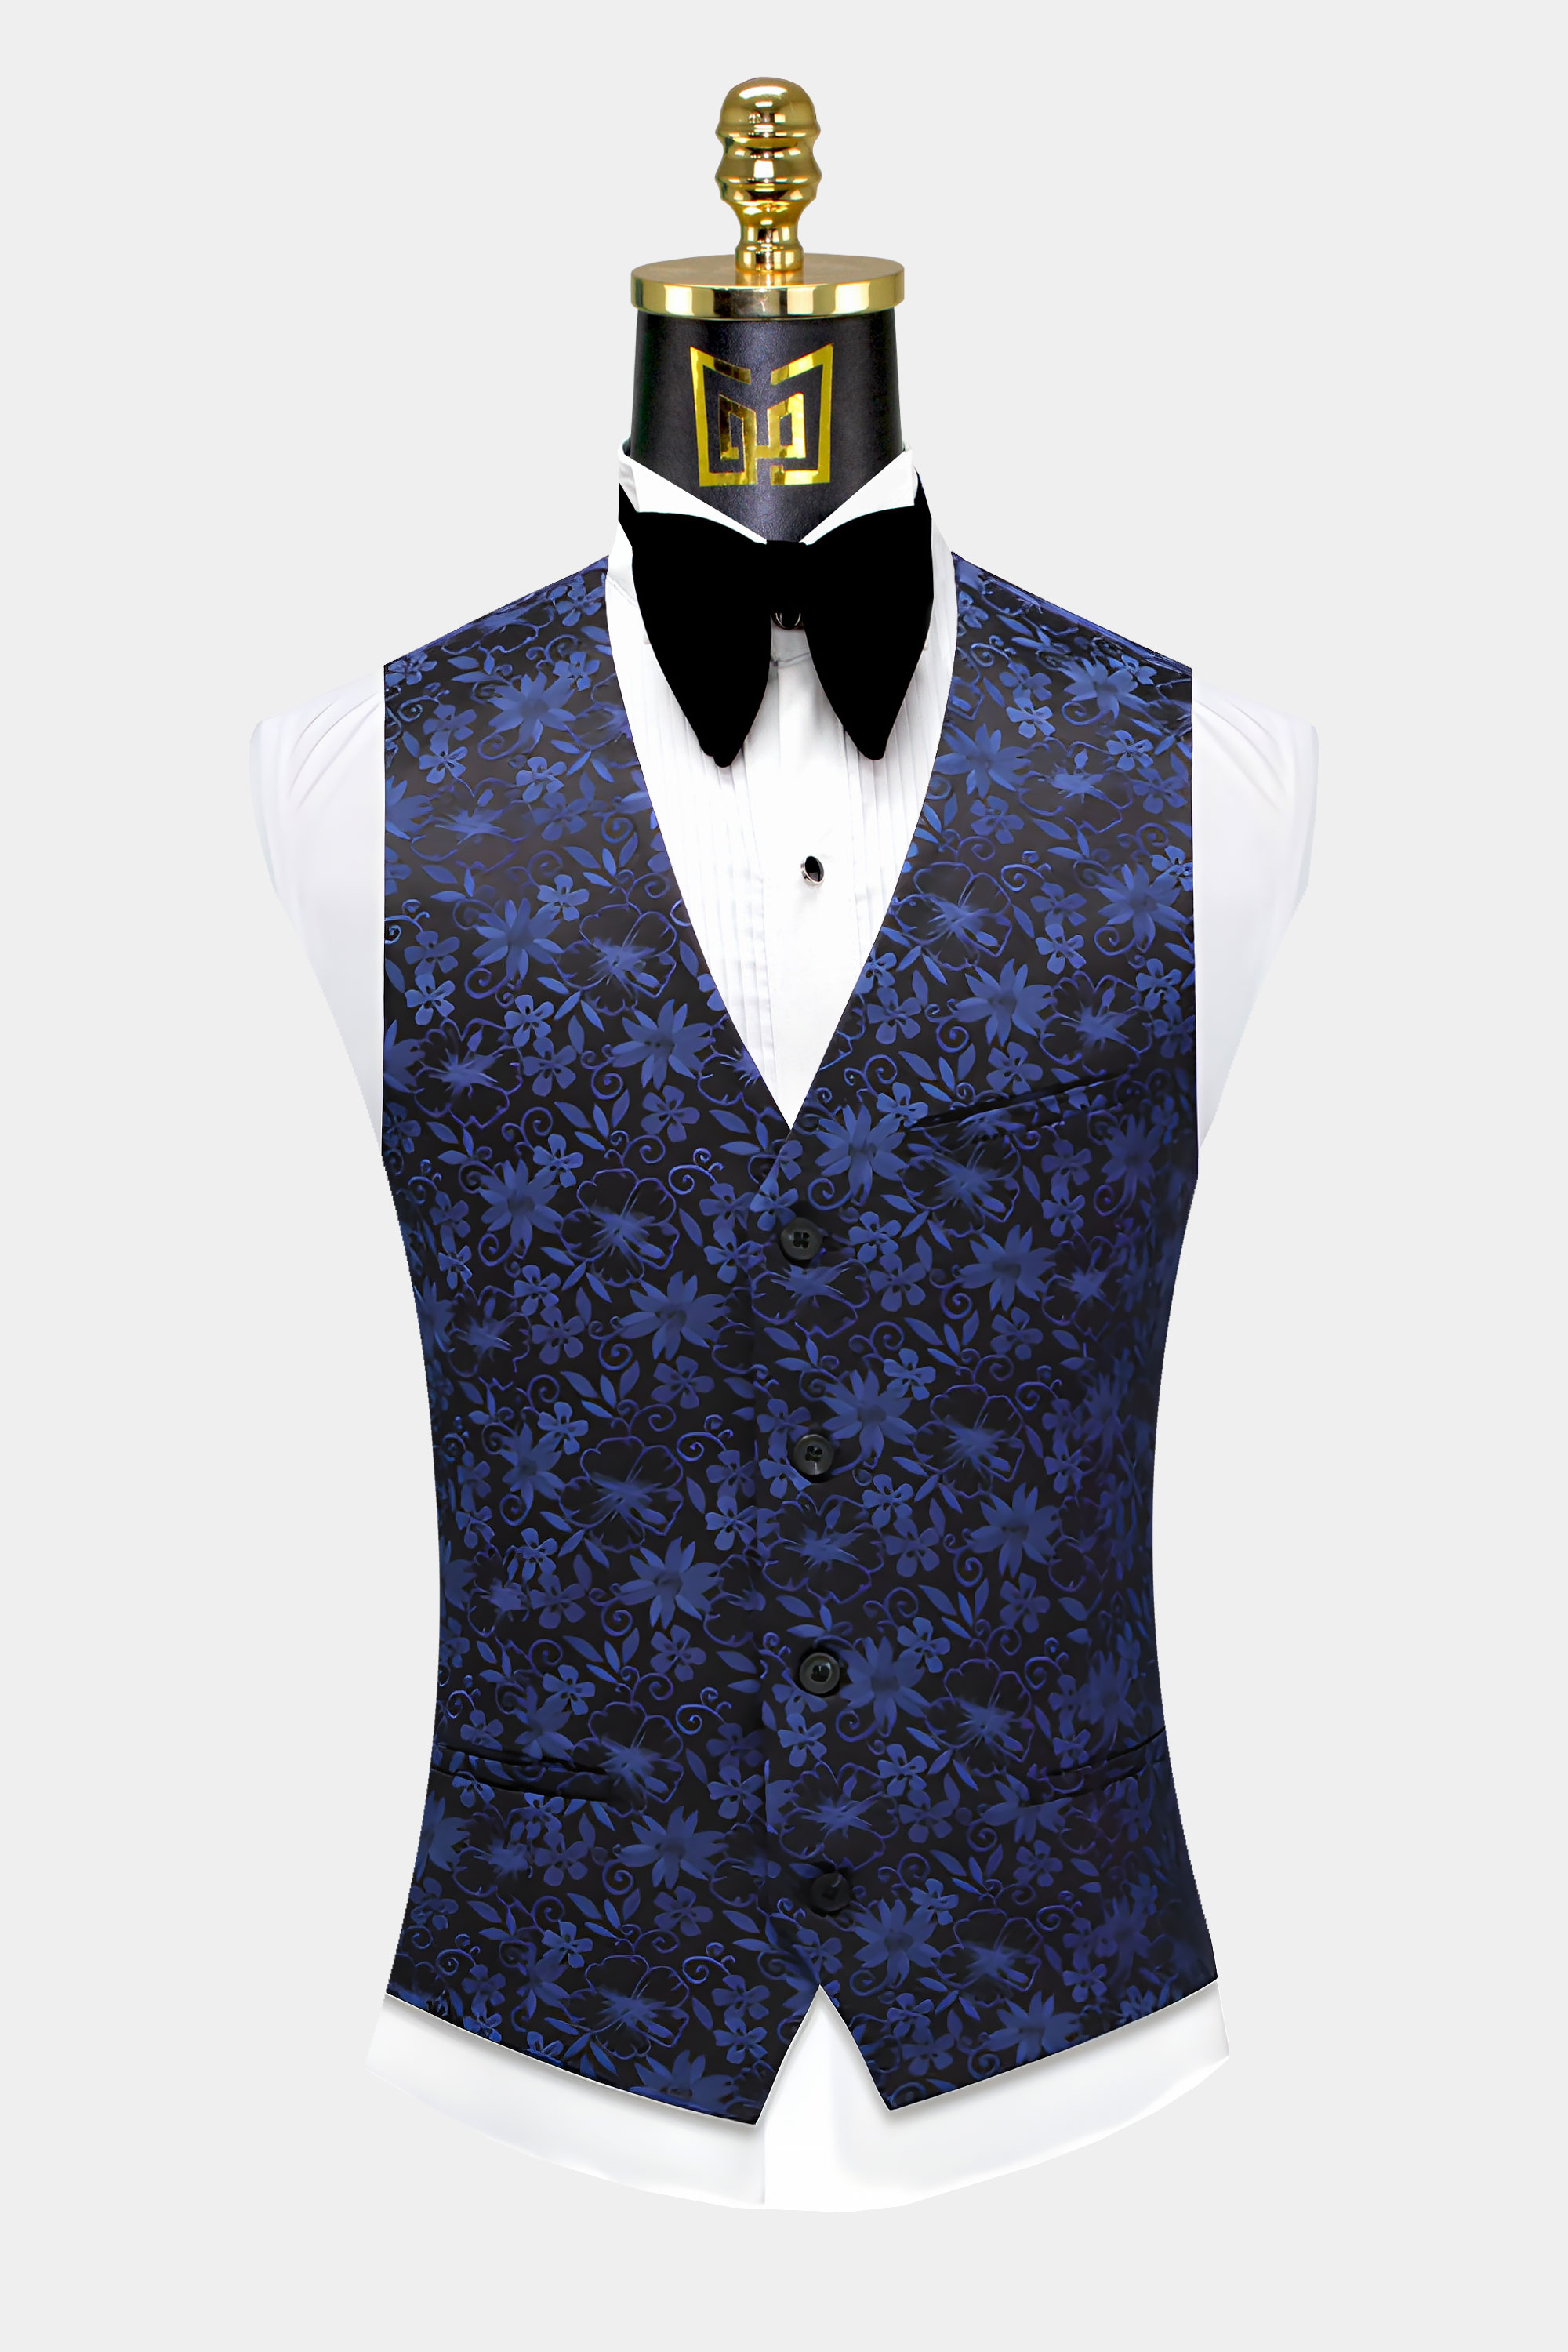 Daisy-Blue-Floral-Suit-Vest-from-Gentlemansguru.com